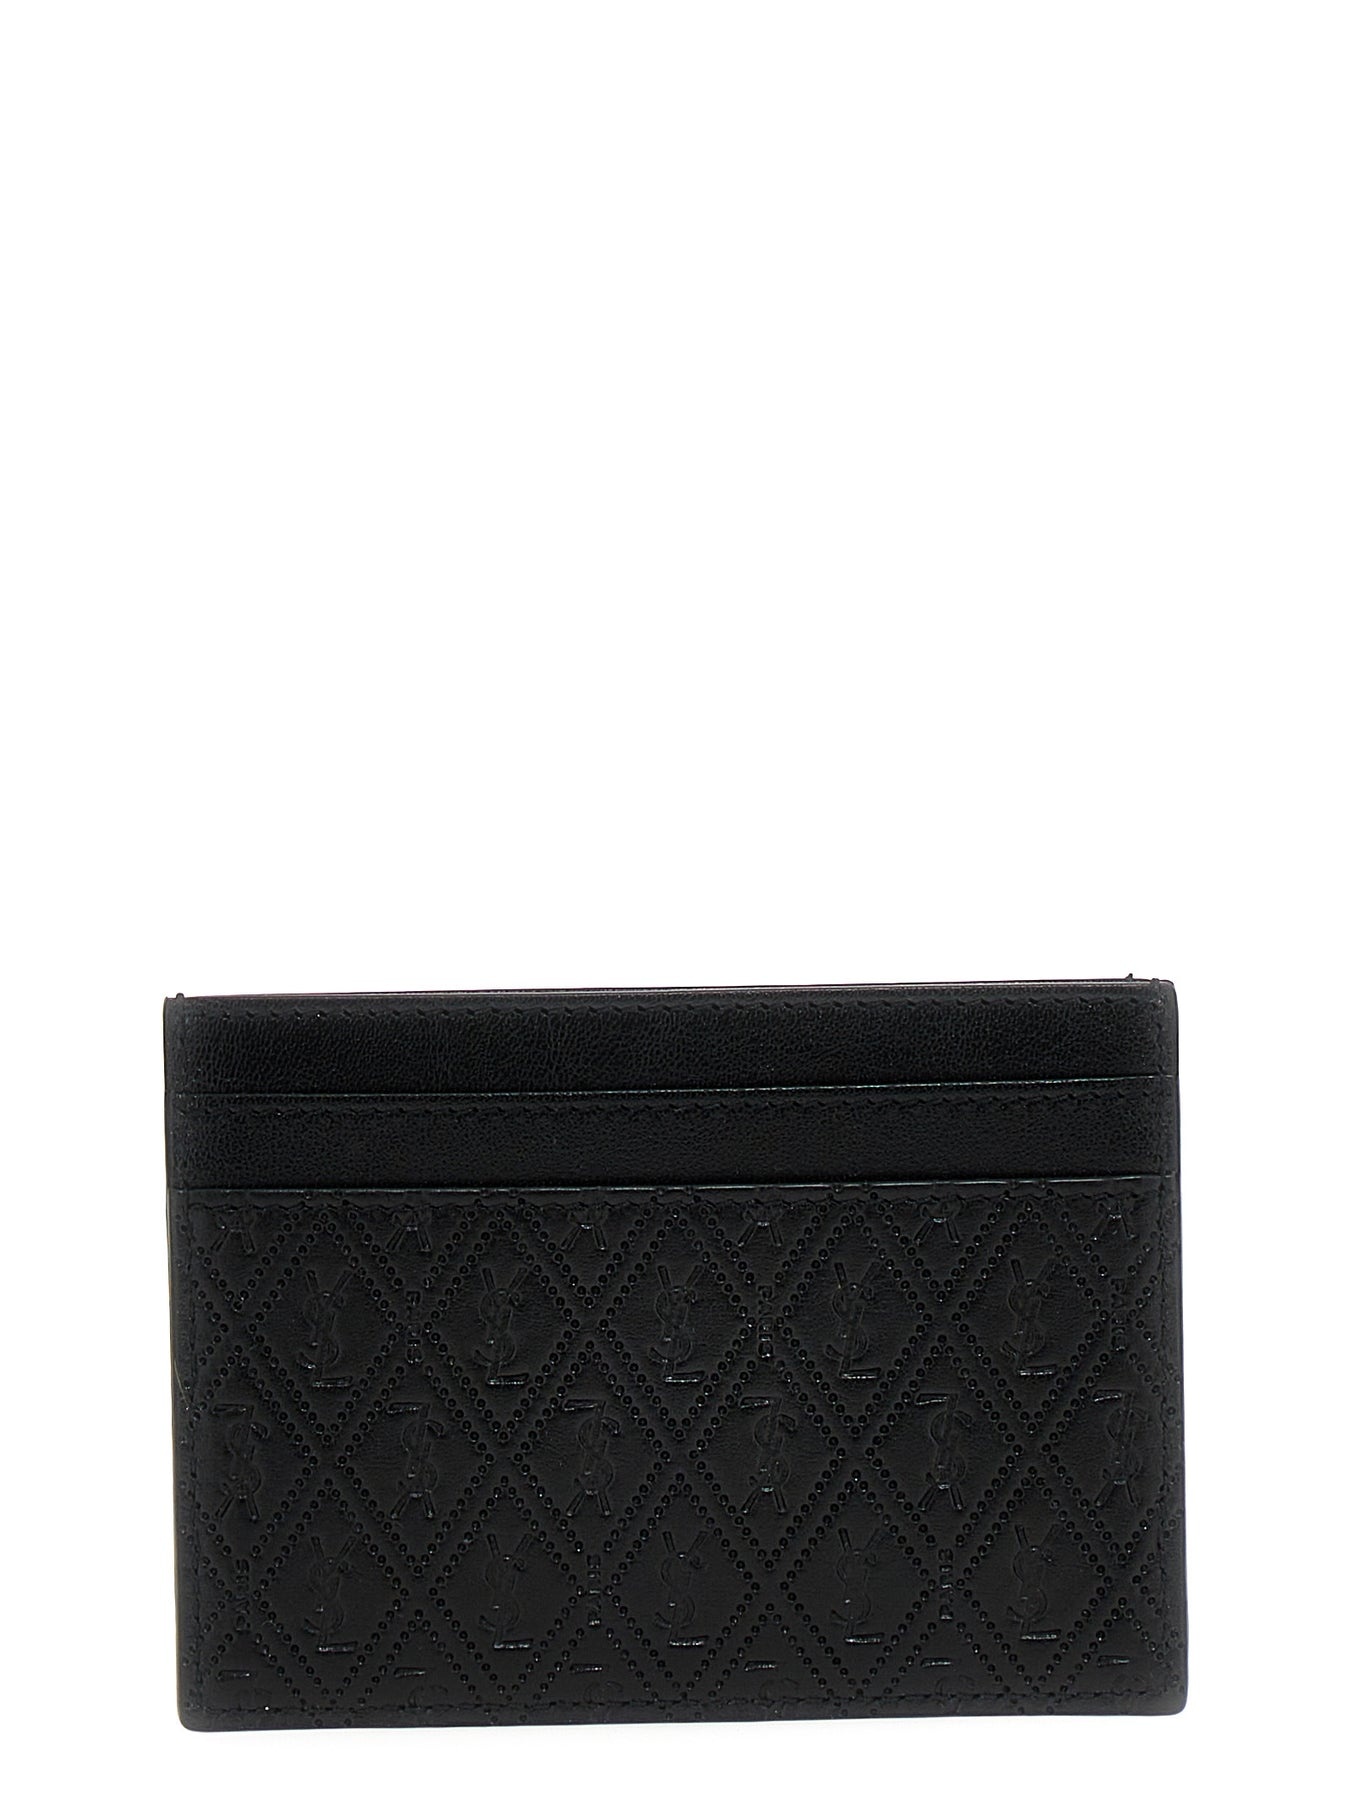 Le Monogramme Wallets, Card Holders Black - 2